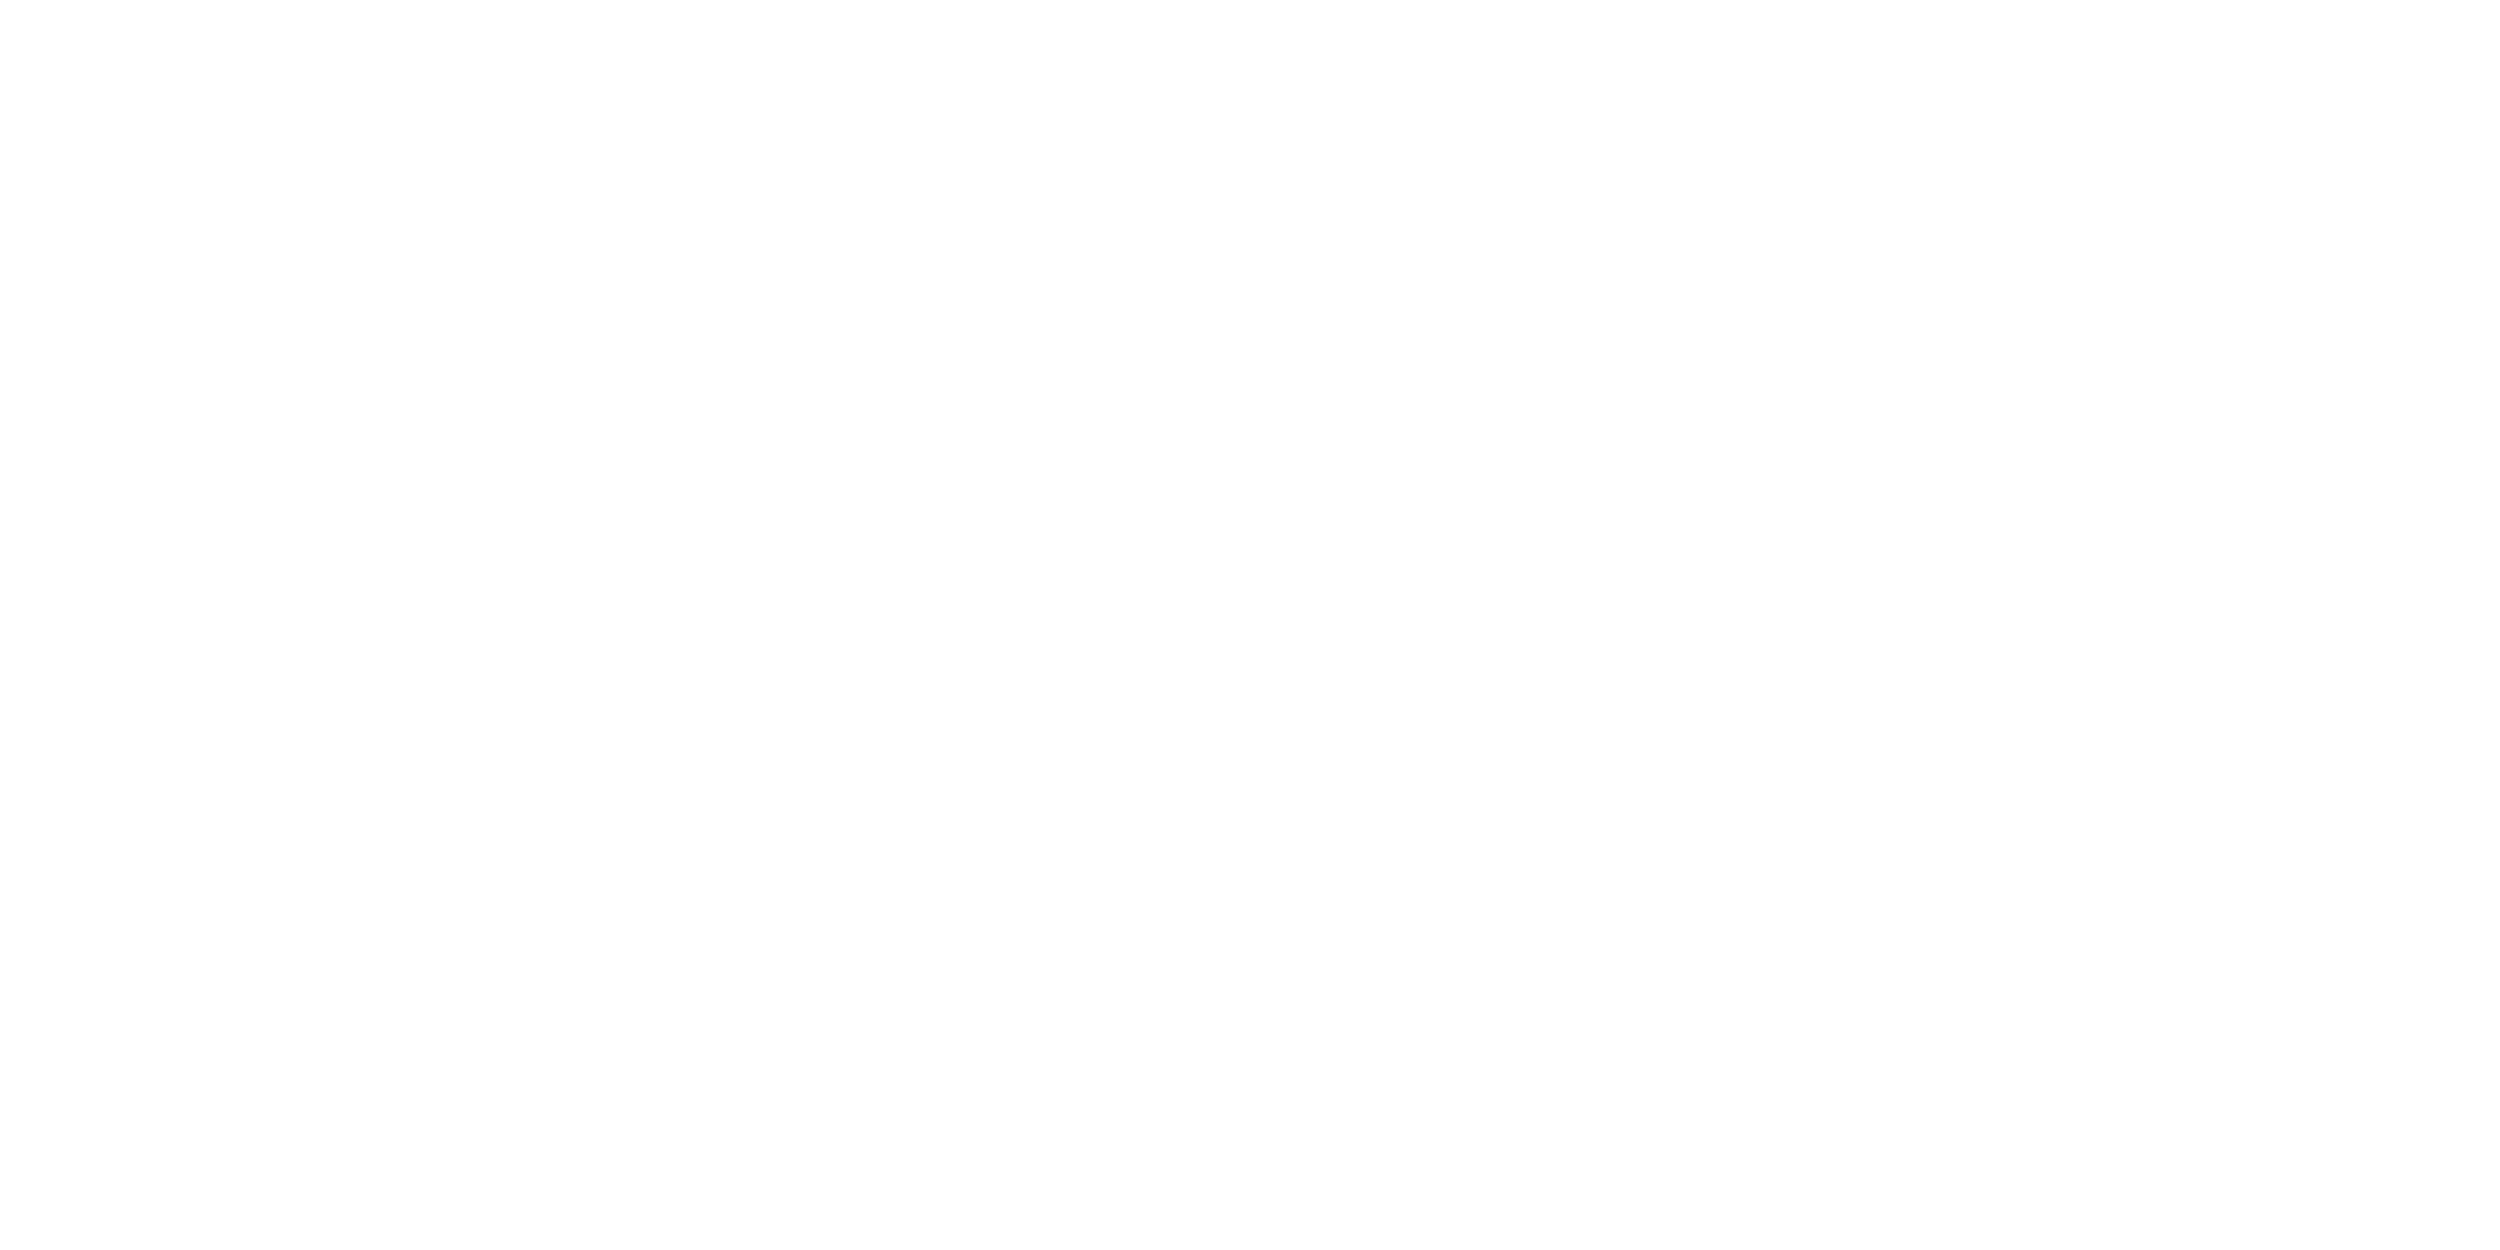 PJ Kelley Music